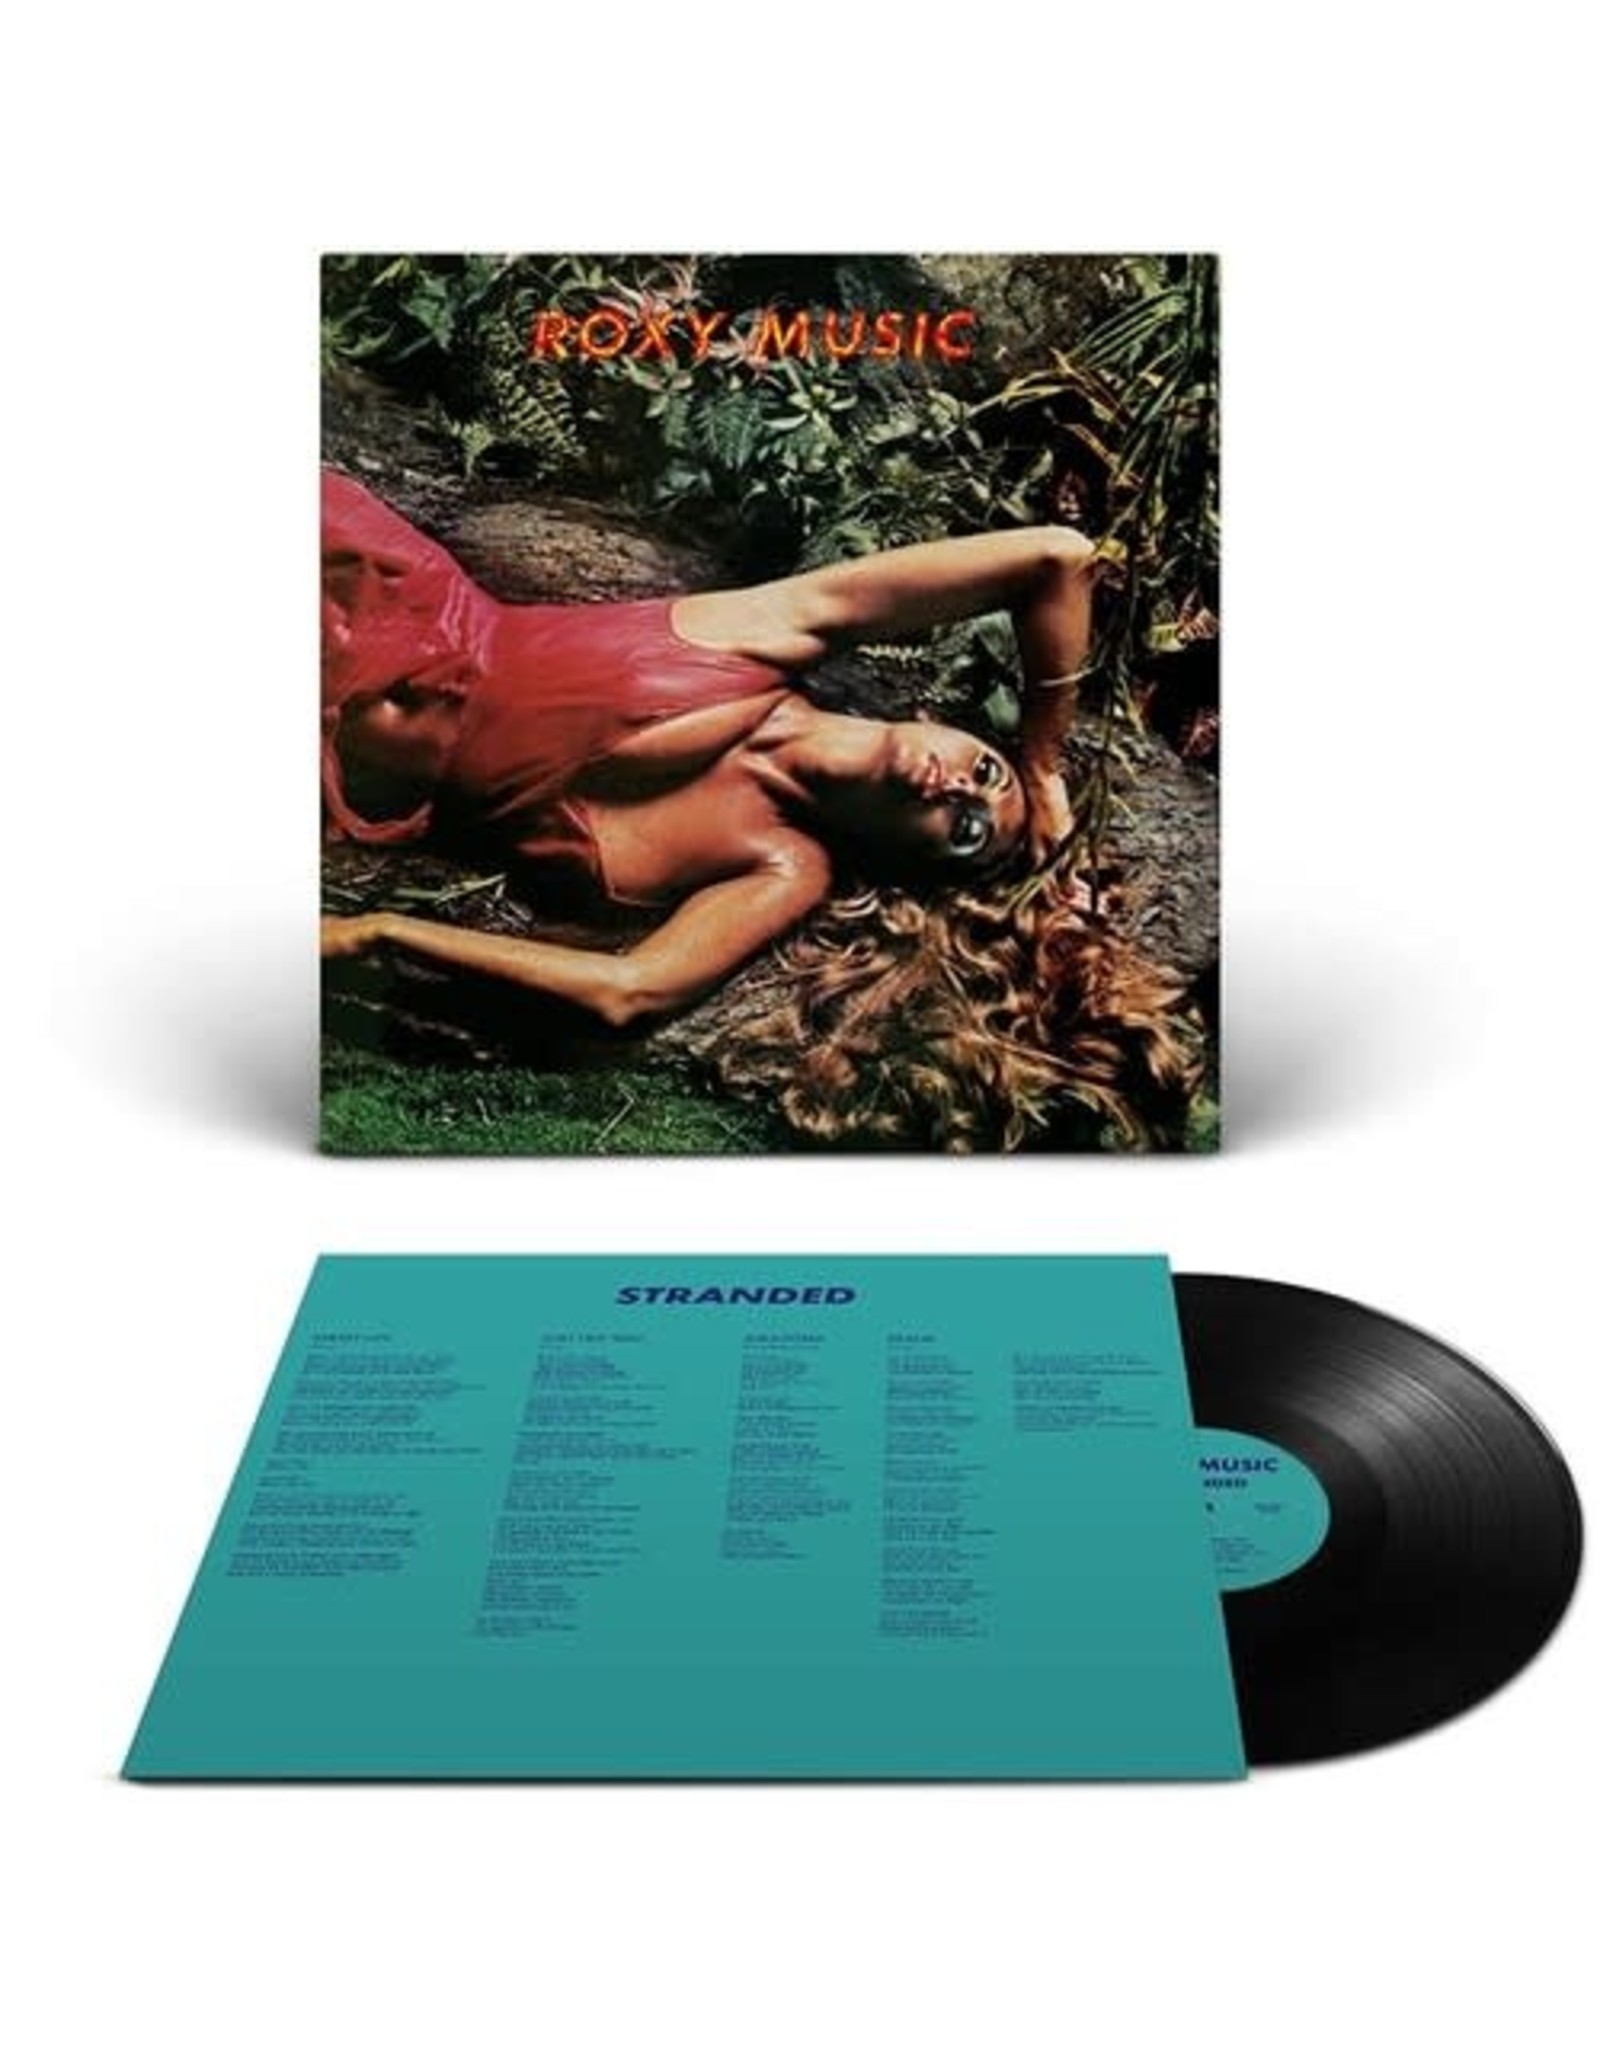 New Vinyl Roxy Music - Stranded (180g) LP